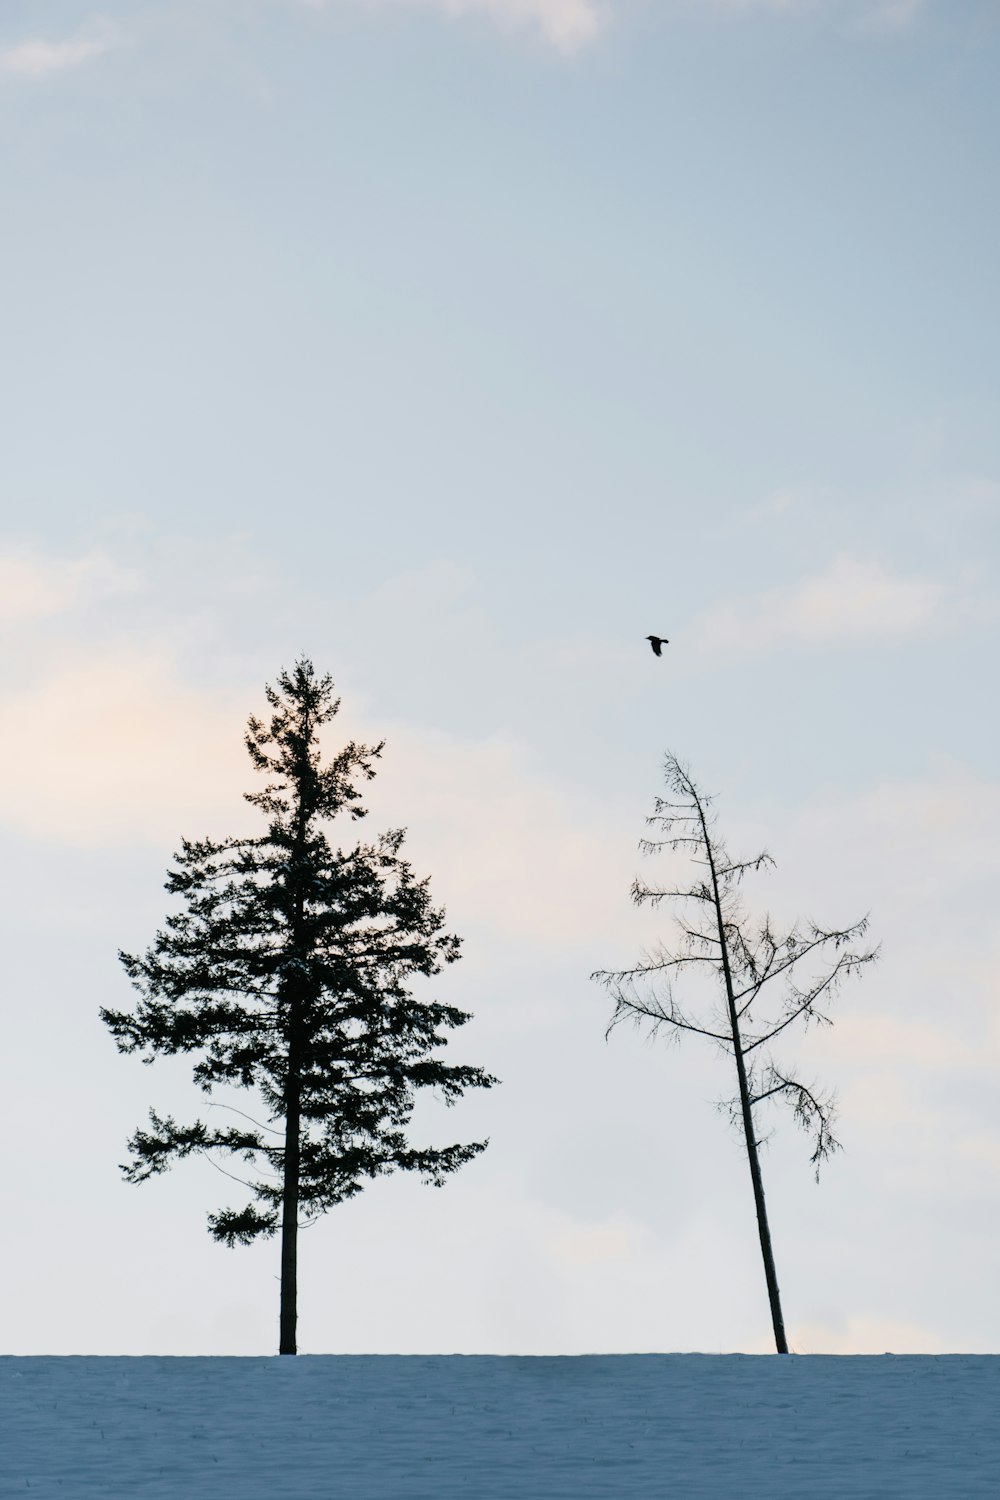 bird flying over green trees during daytime